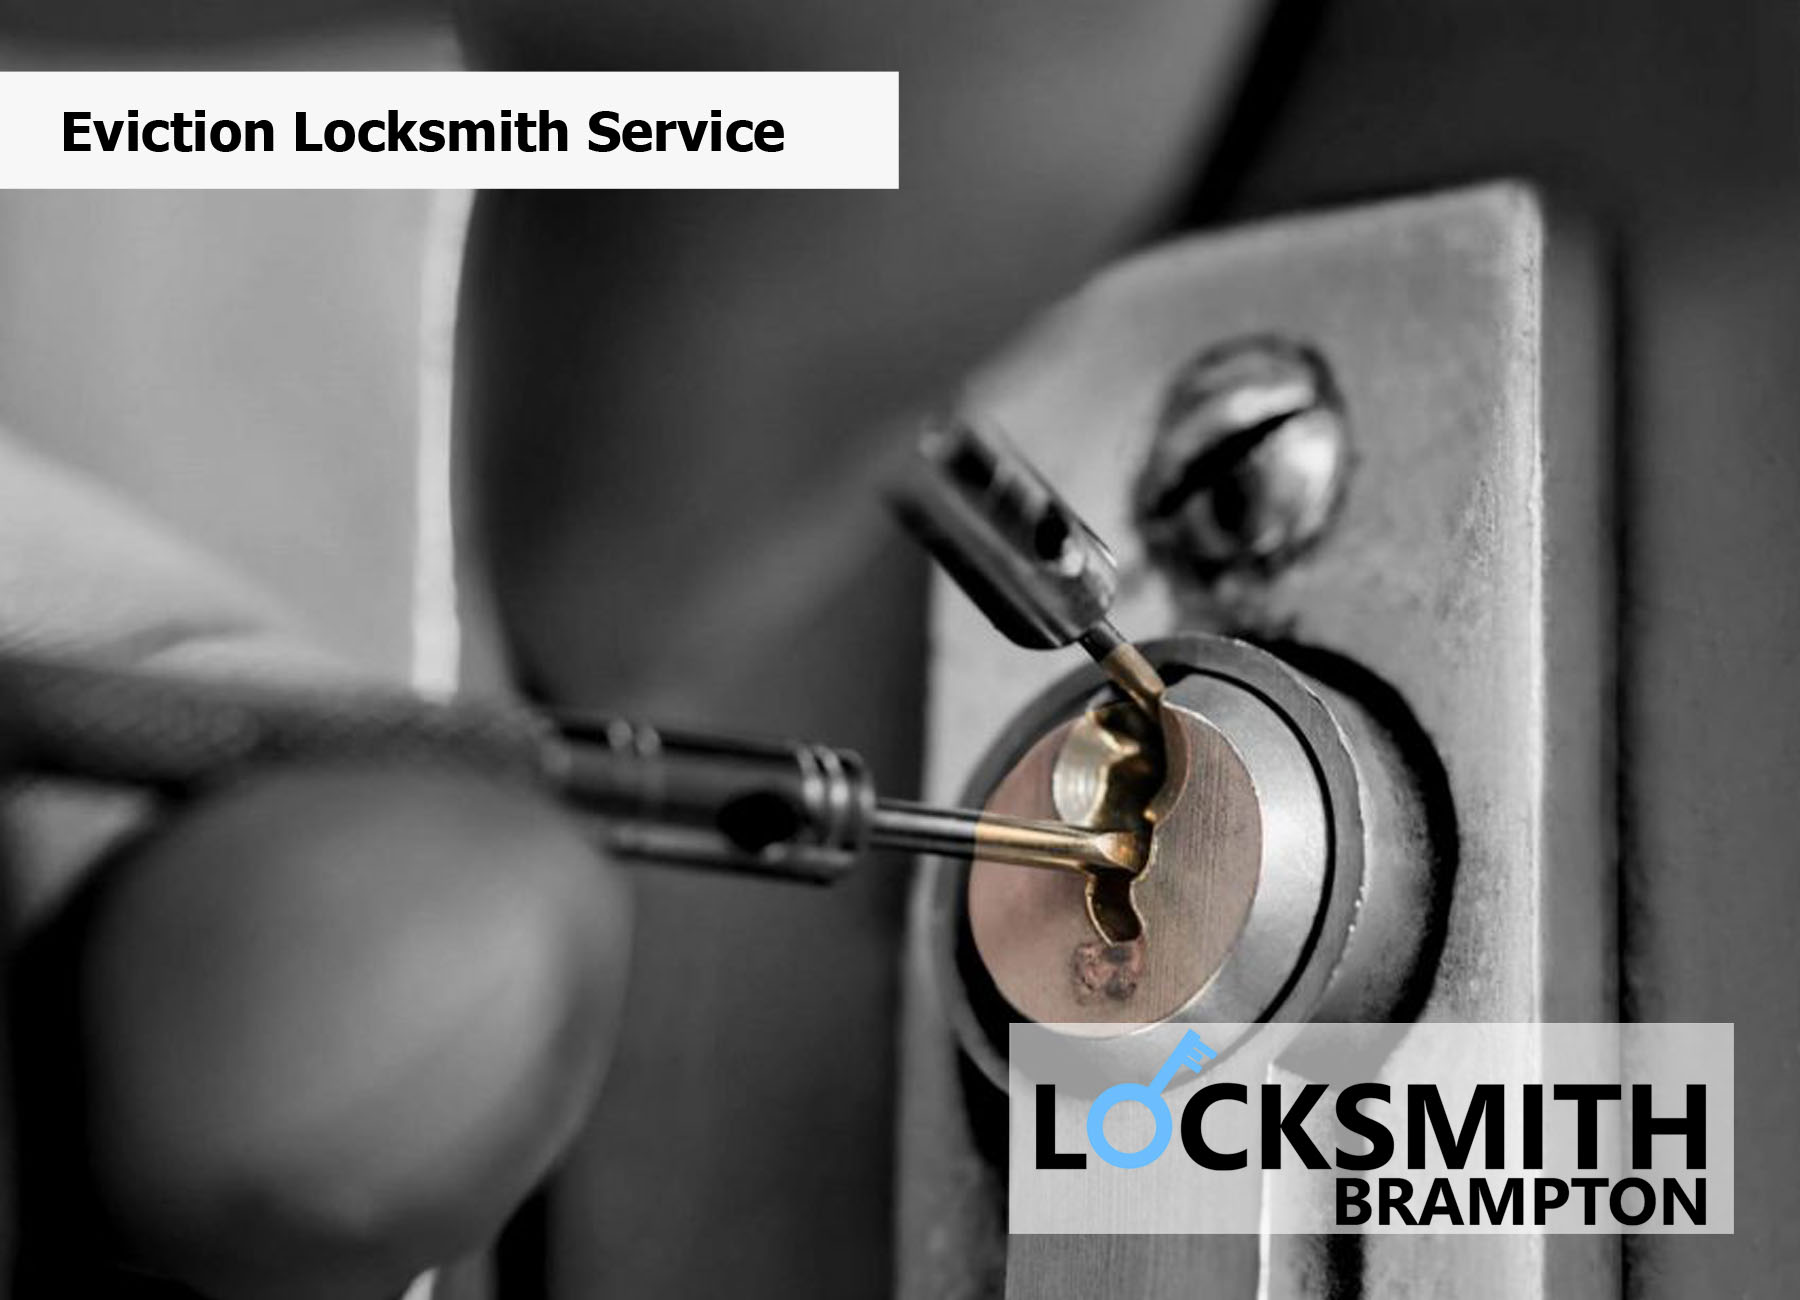 Eviction Locksmith Service